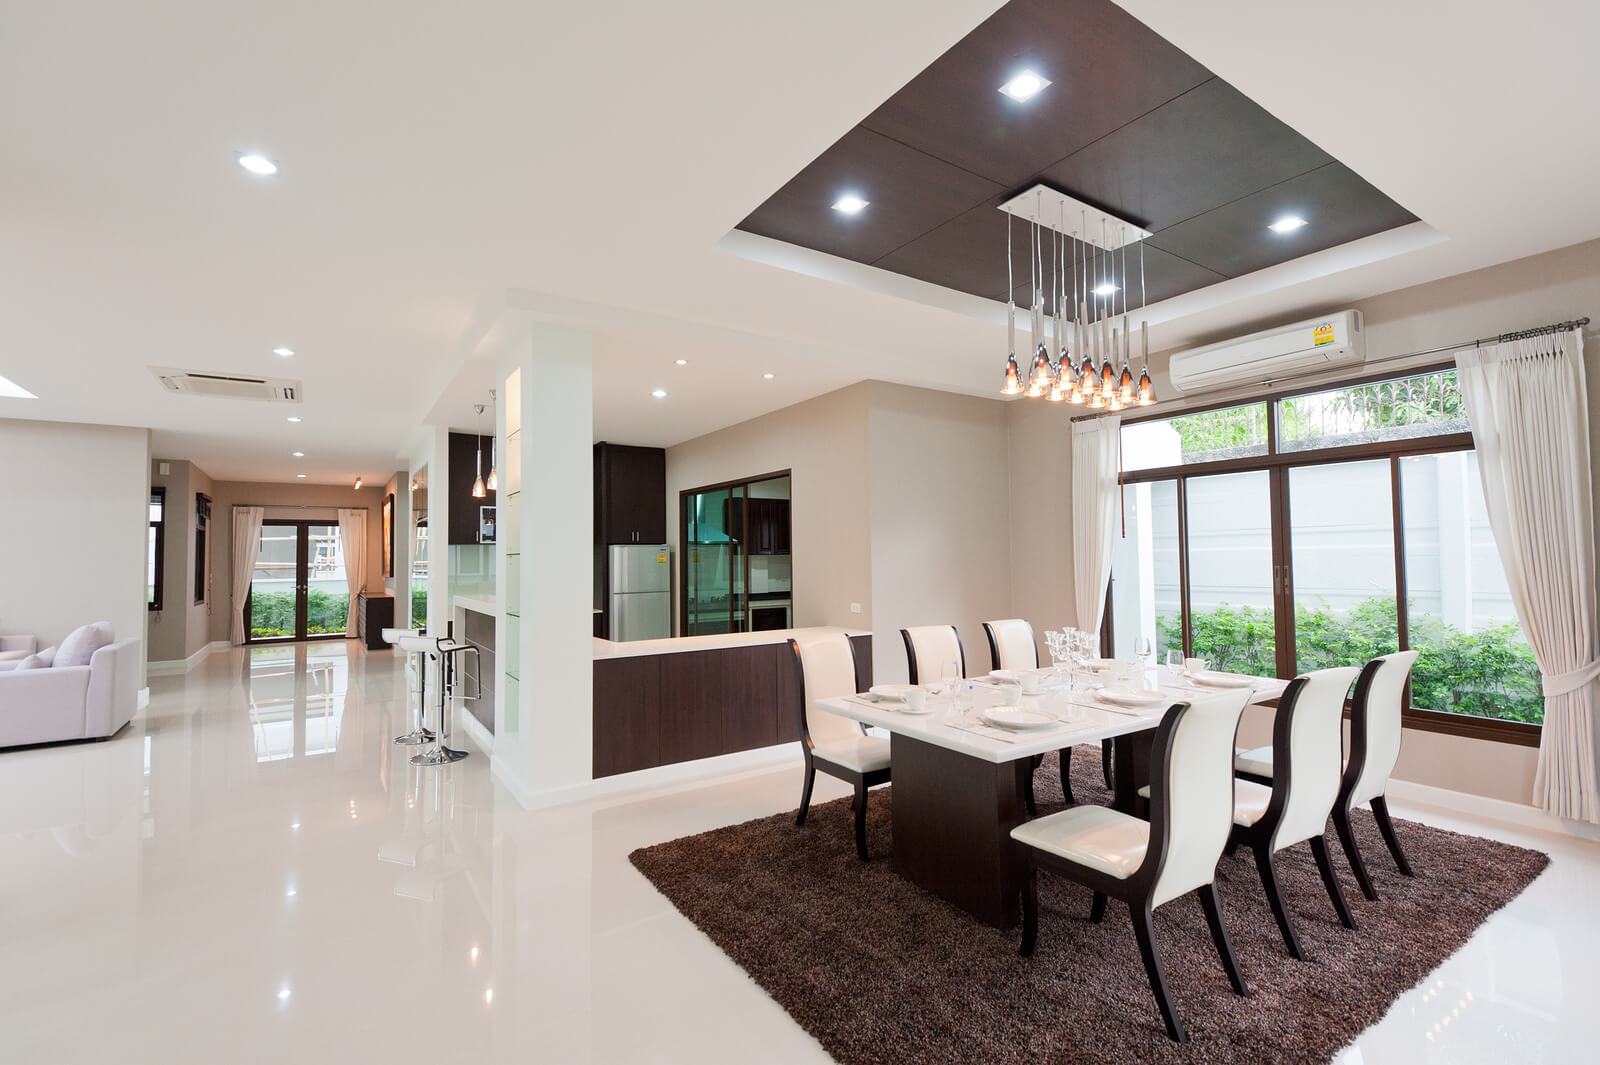 Home Interior Designs 5 Biggest Trends!